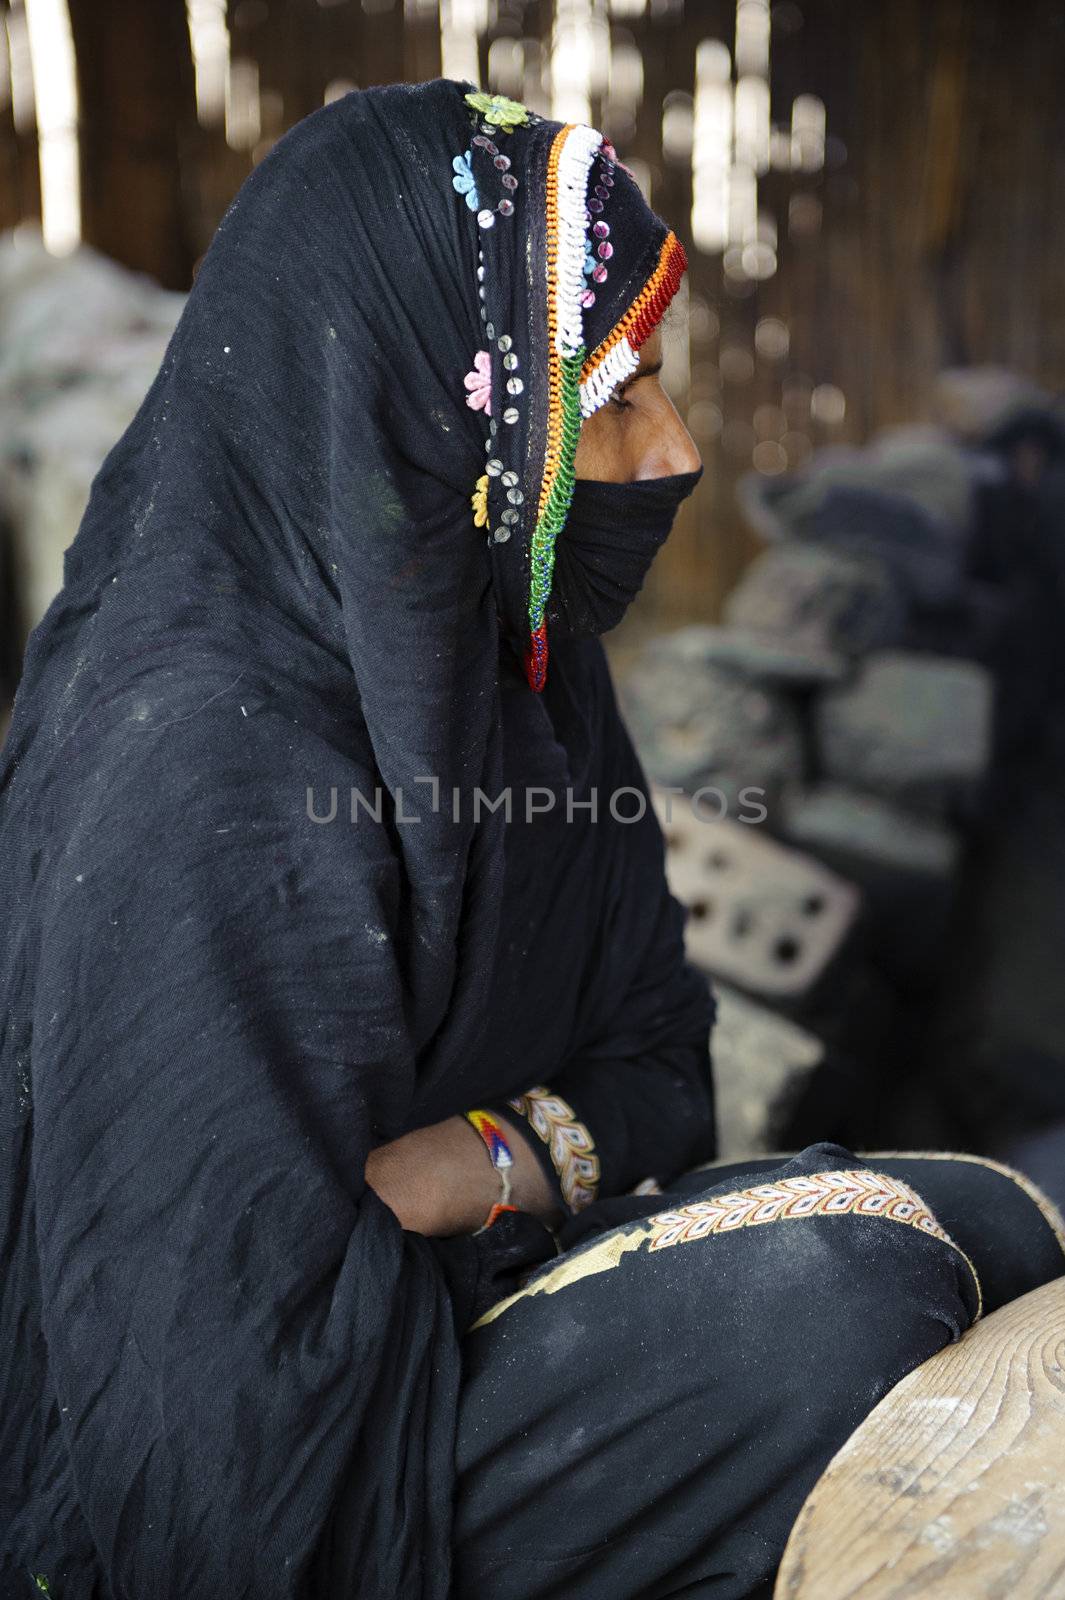 veiling Bedouin woman by jackq